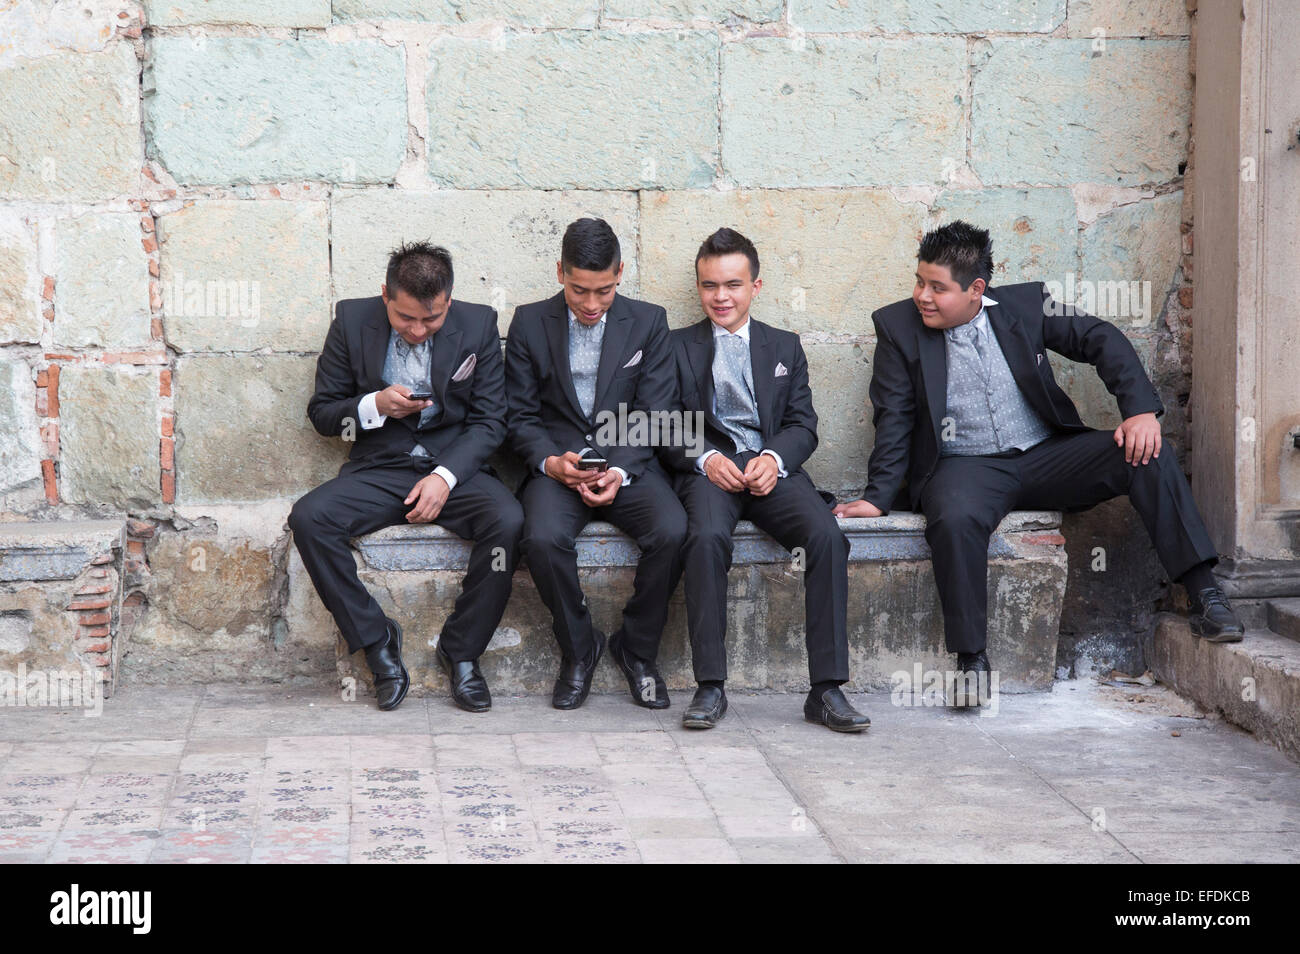 Oaxaca, Mexico - Teenage boys dressed formally outside San Felipe Neri church. Stock Photo